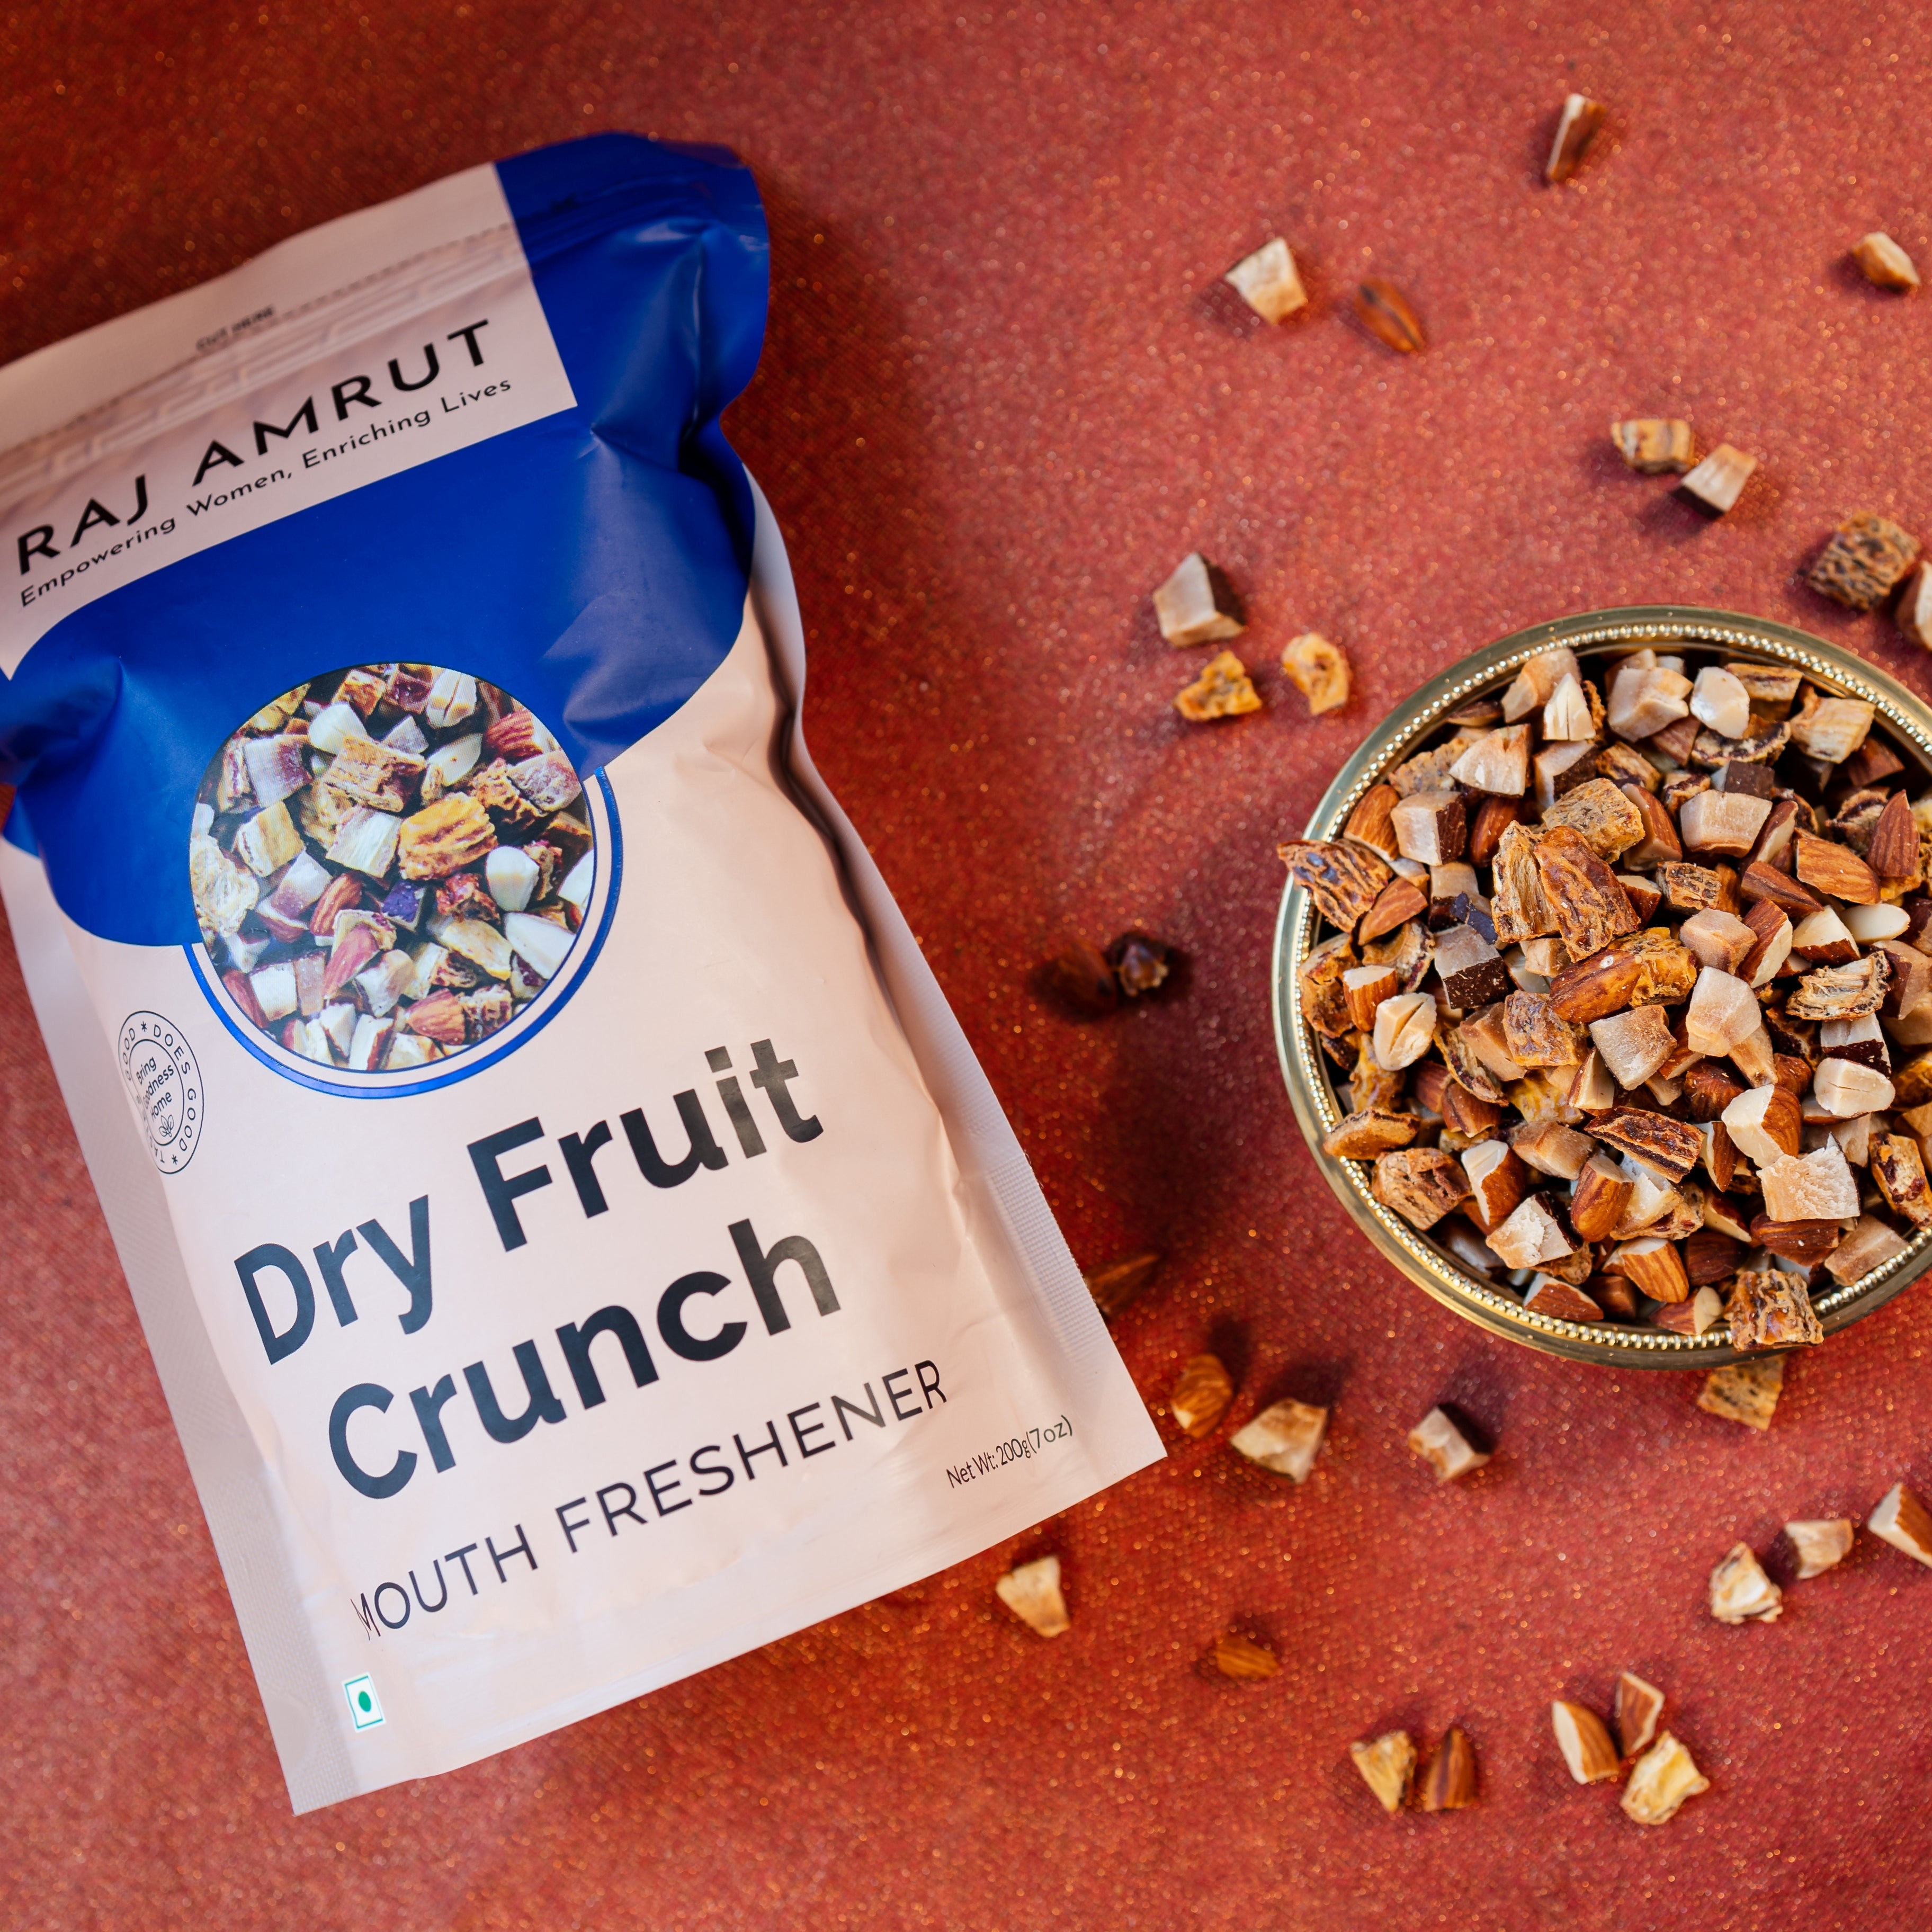 Dry Fruit Crunch Mouth Freshener (200g)